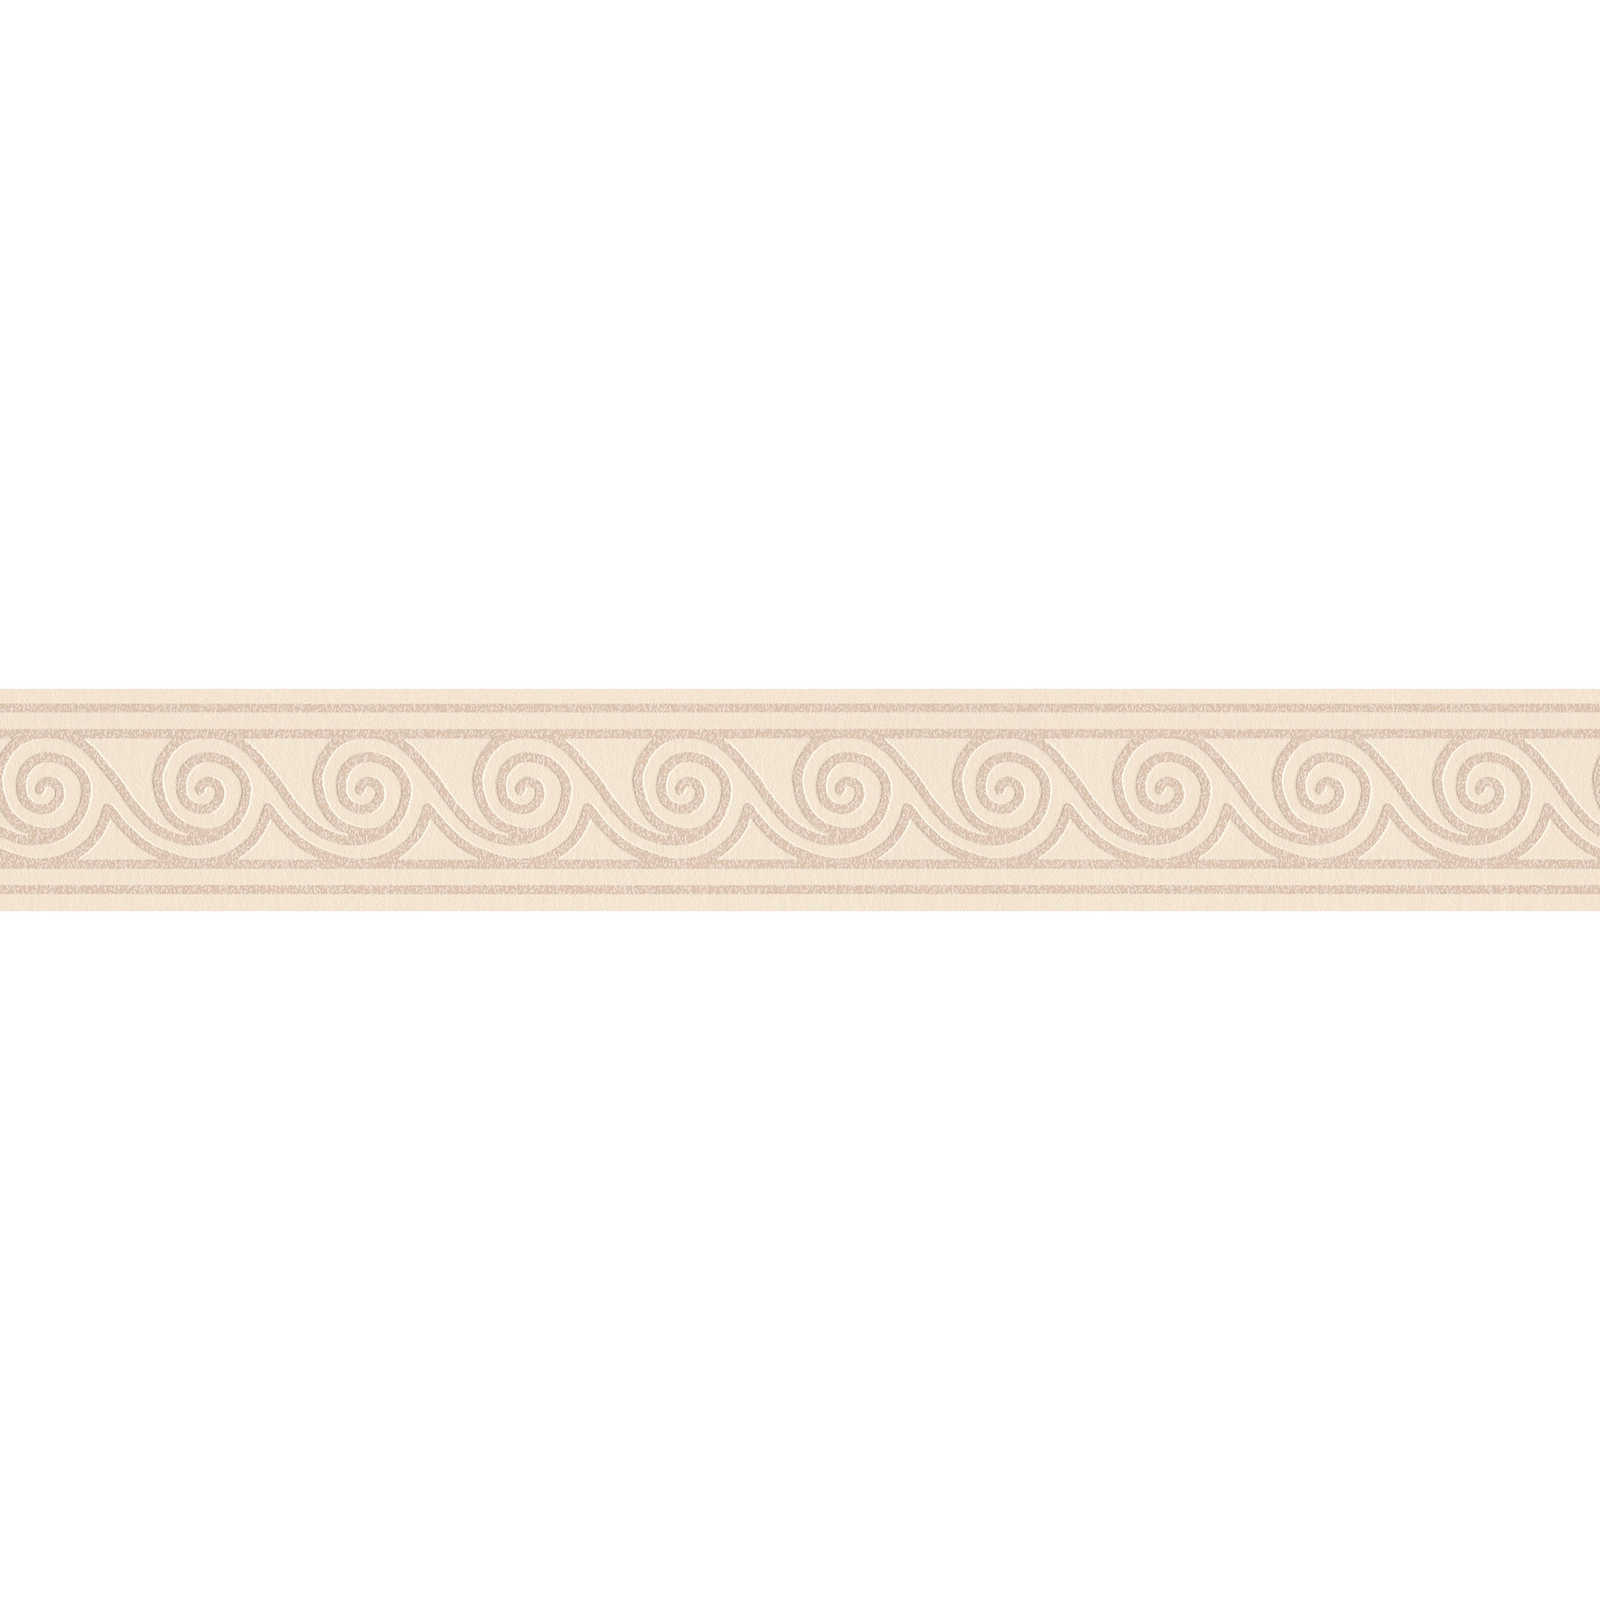         Cream and white wallpaper border with Greek key motif
    